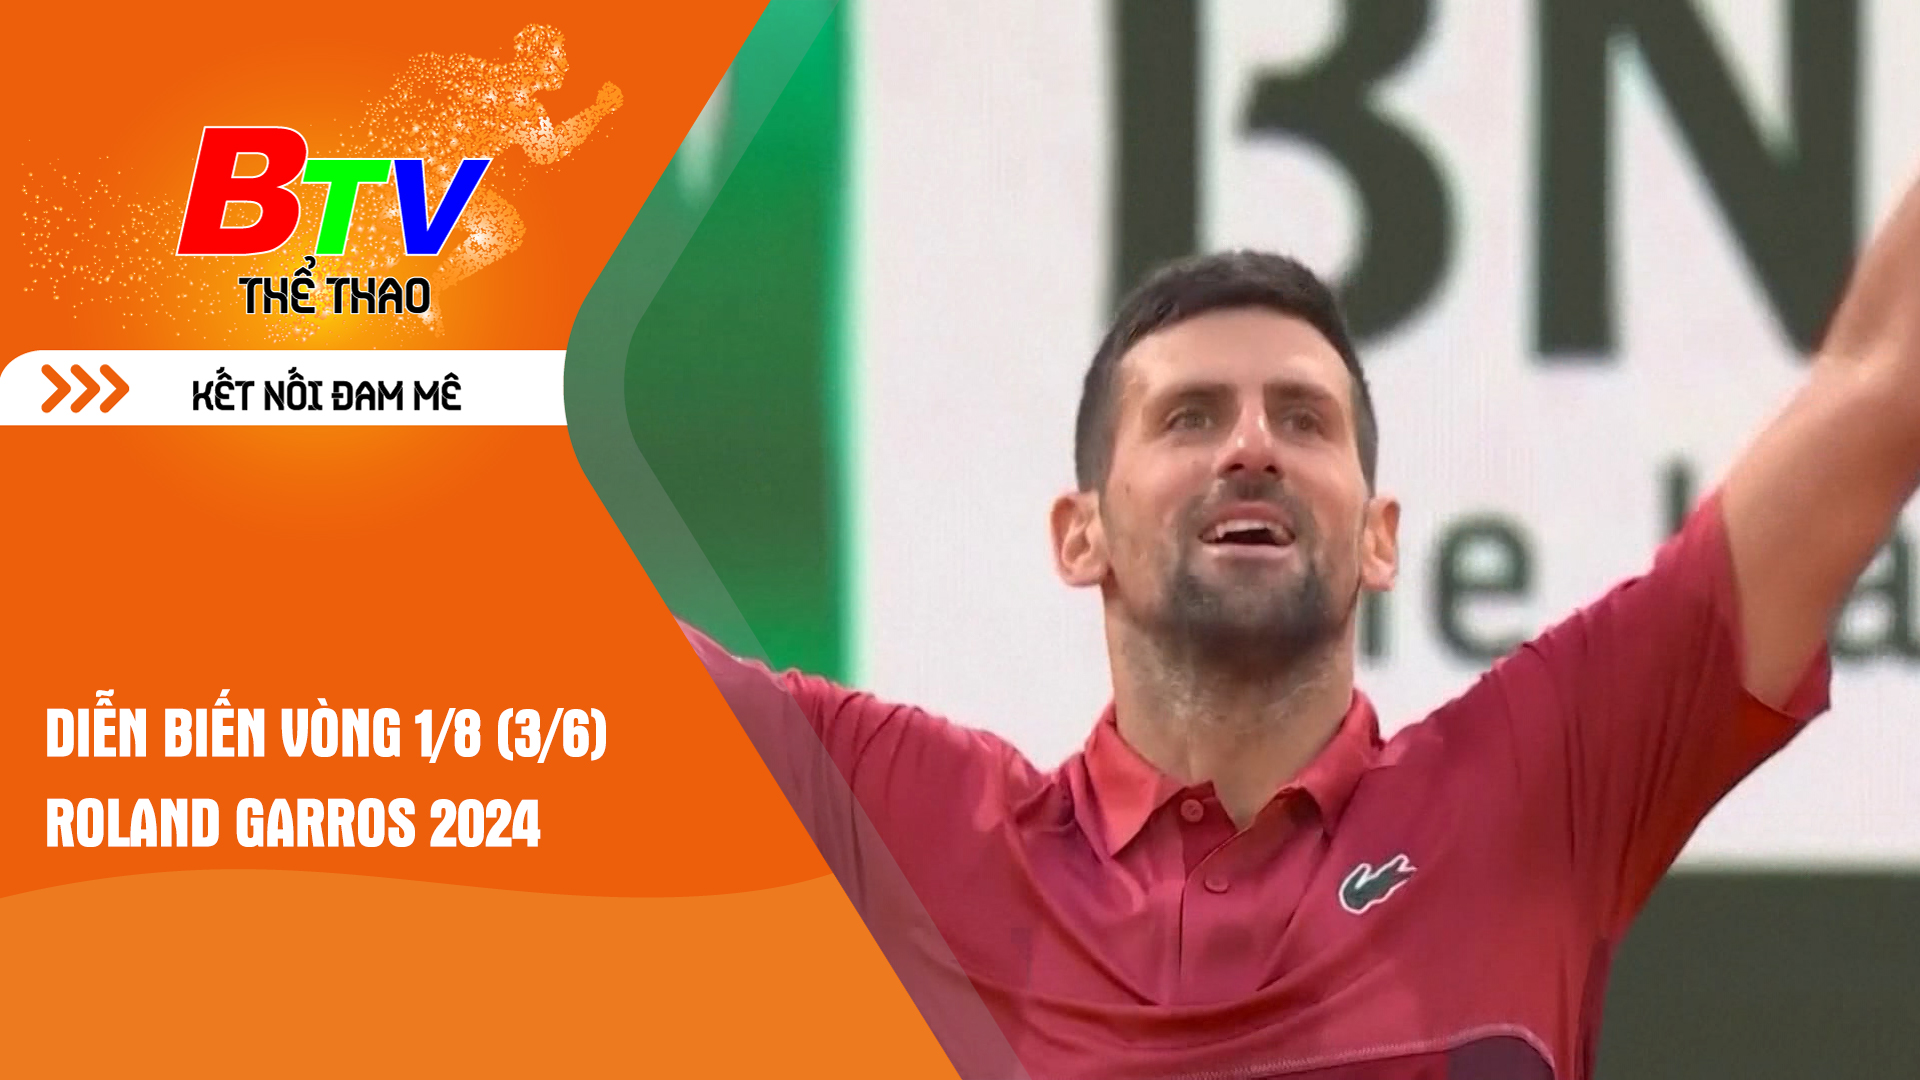 Diễn biến vòng 1/8 (3/6) Roland Garros 2024 | Tin Thể thao 24h	